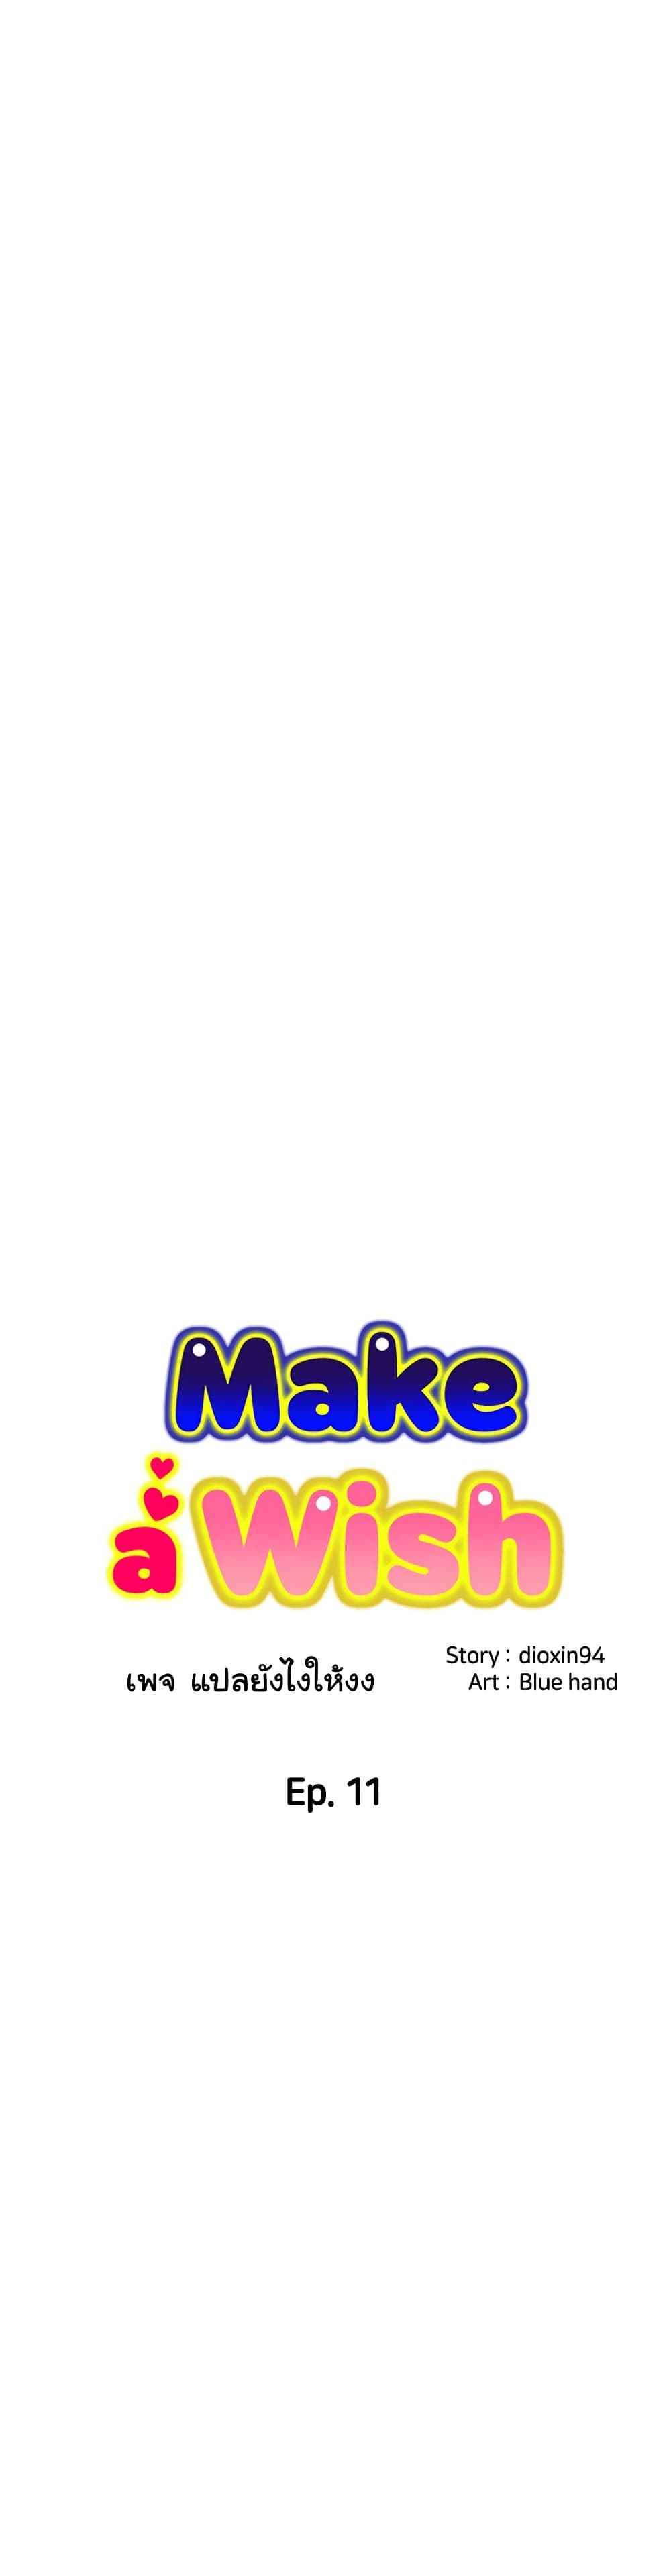 Wish Partner 11-11